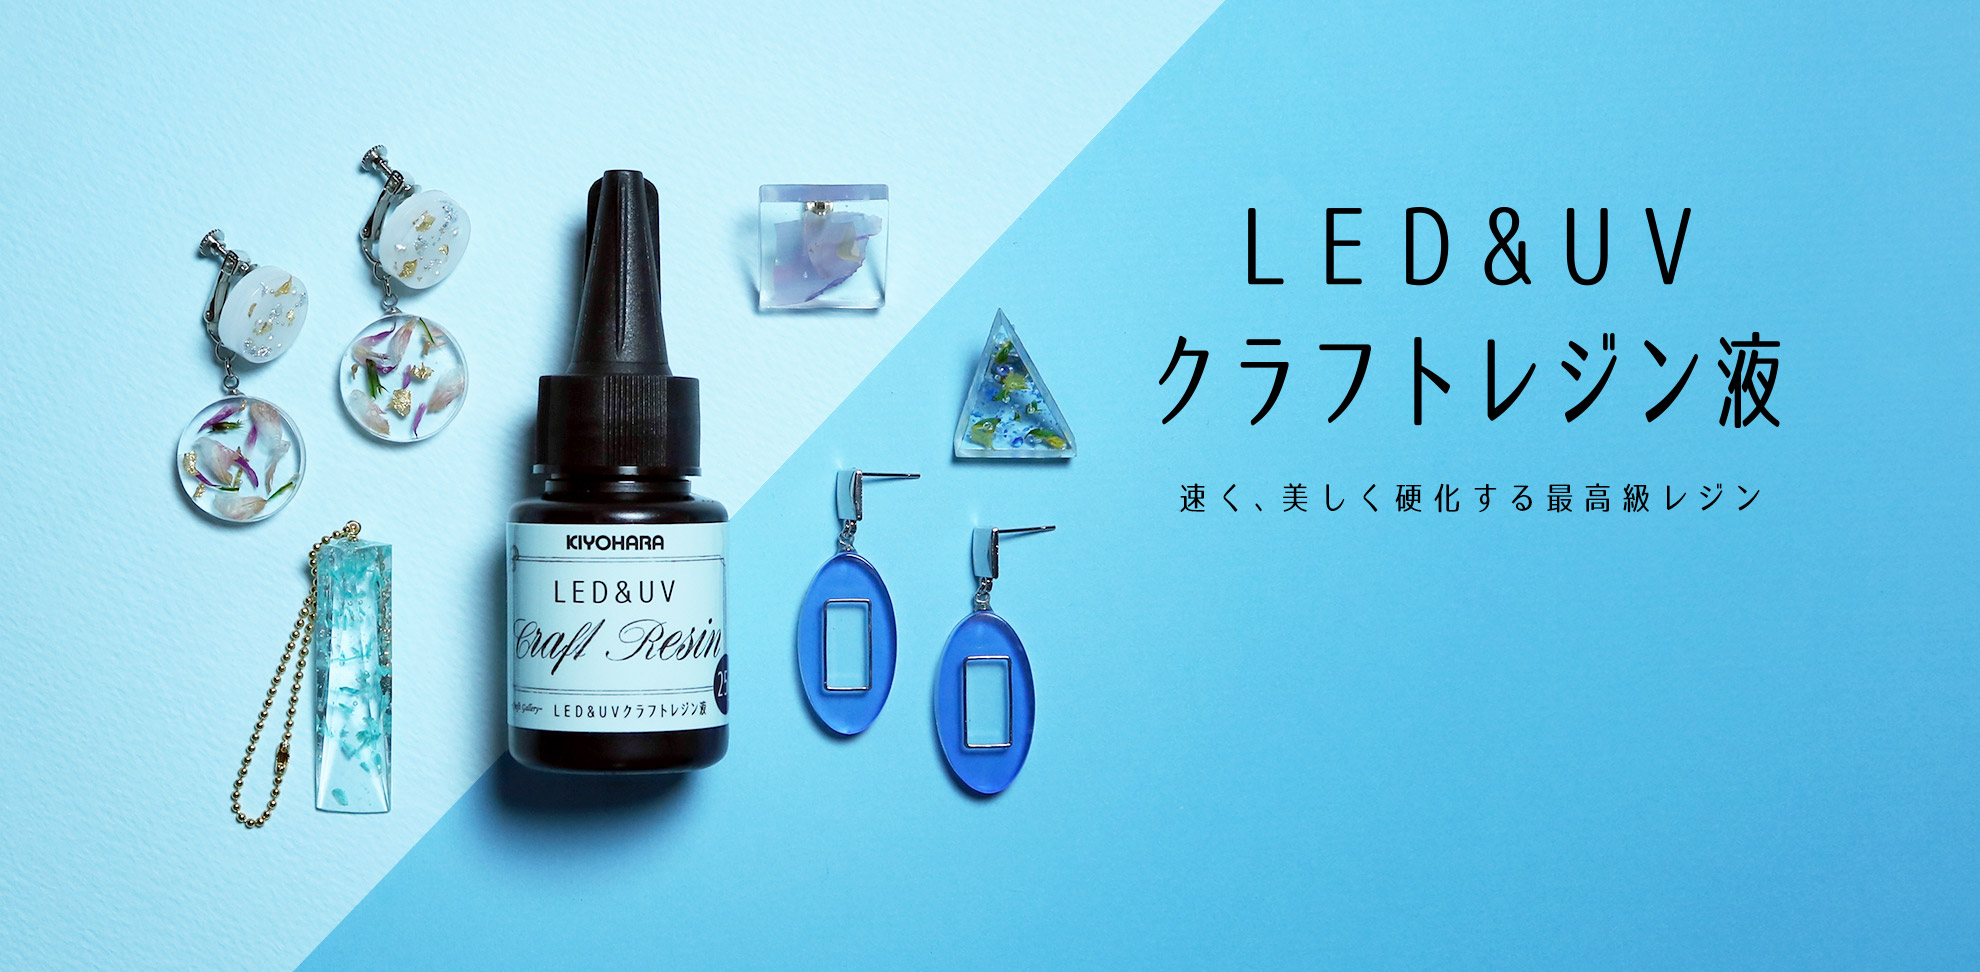 LED&UVクラフトレジン液 速く、美しく硬化する最高級レジン